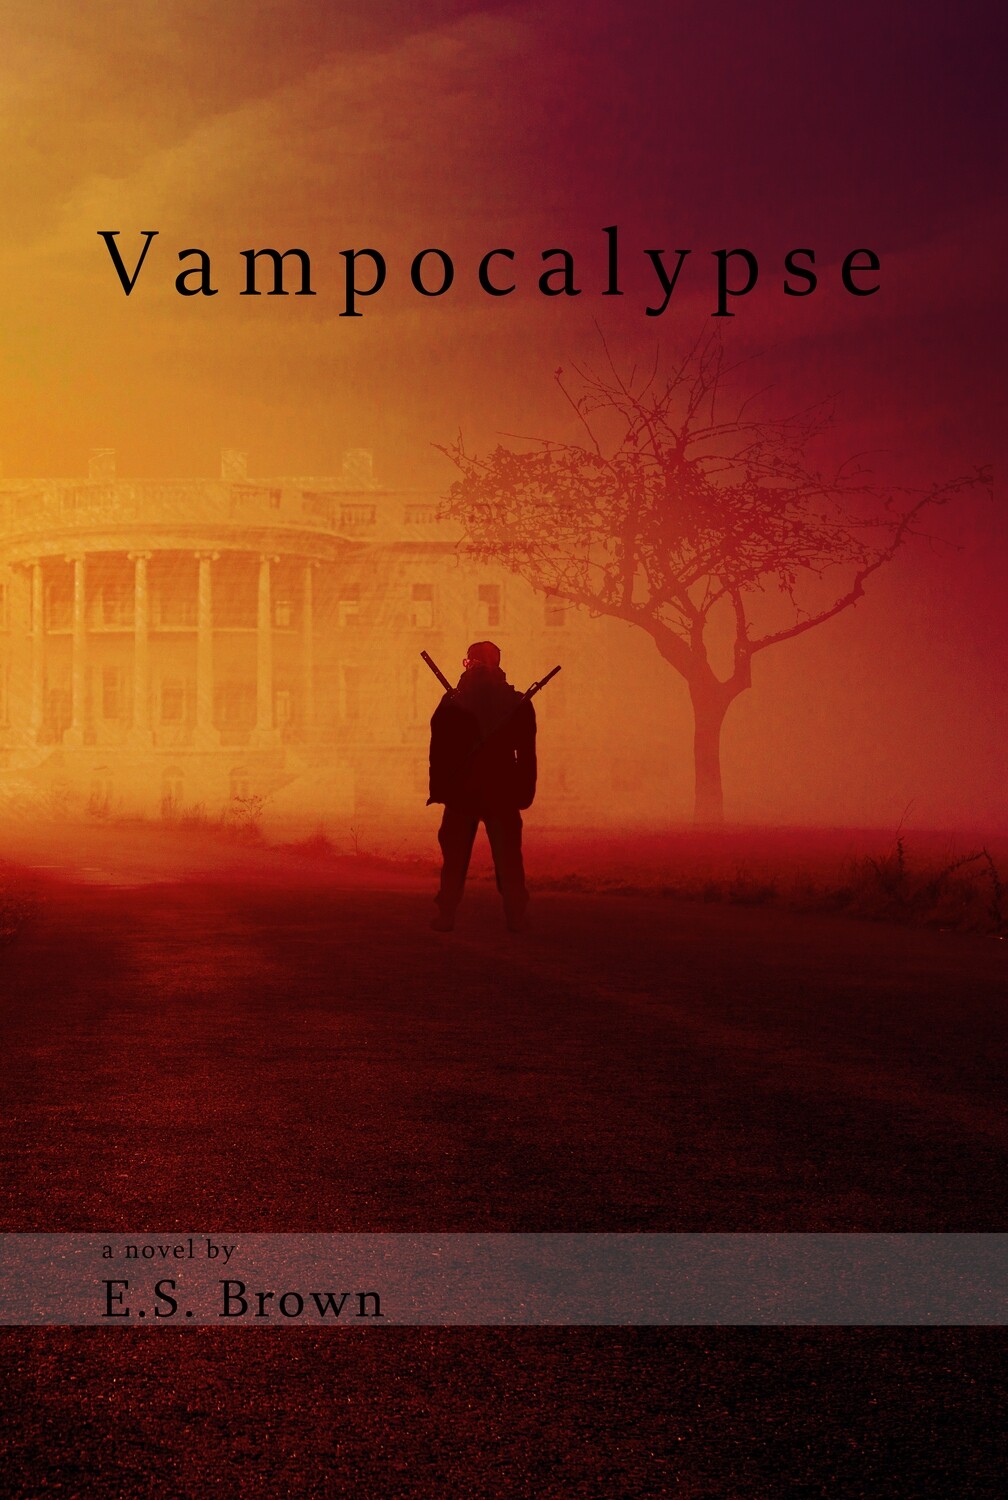 Vampocalypse